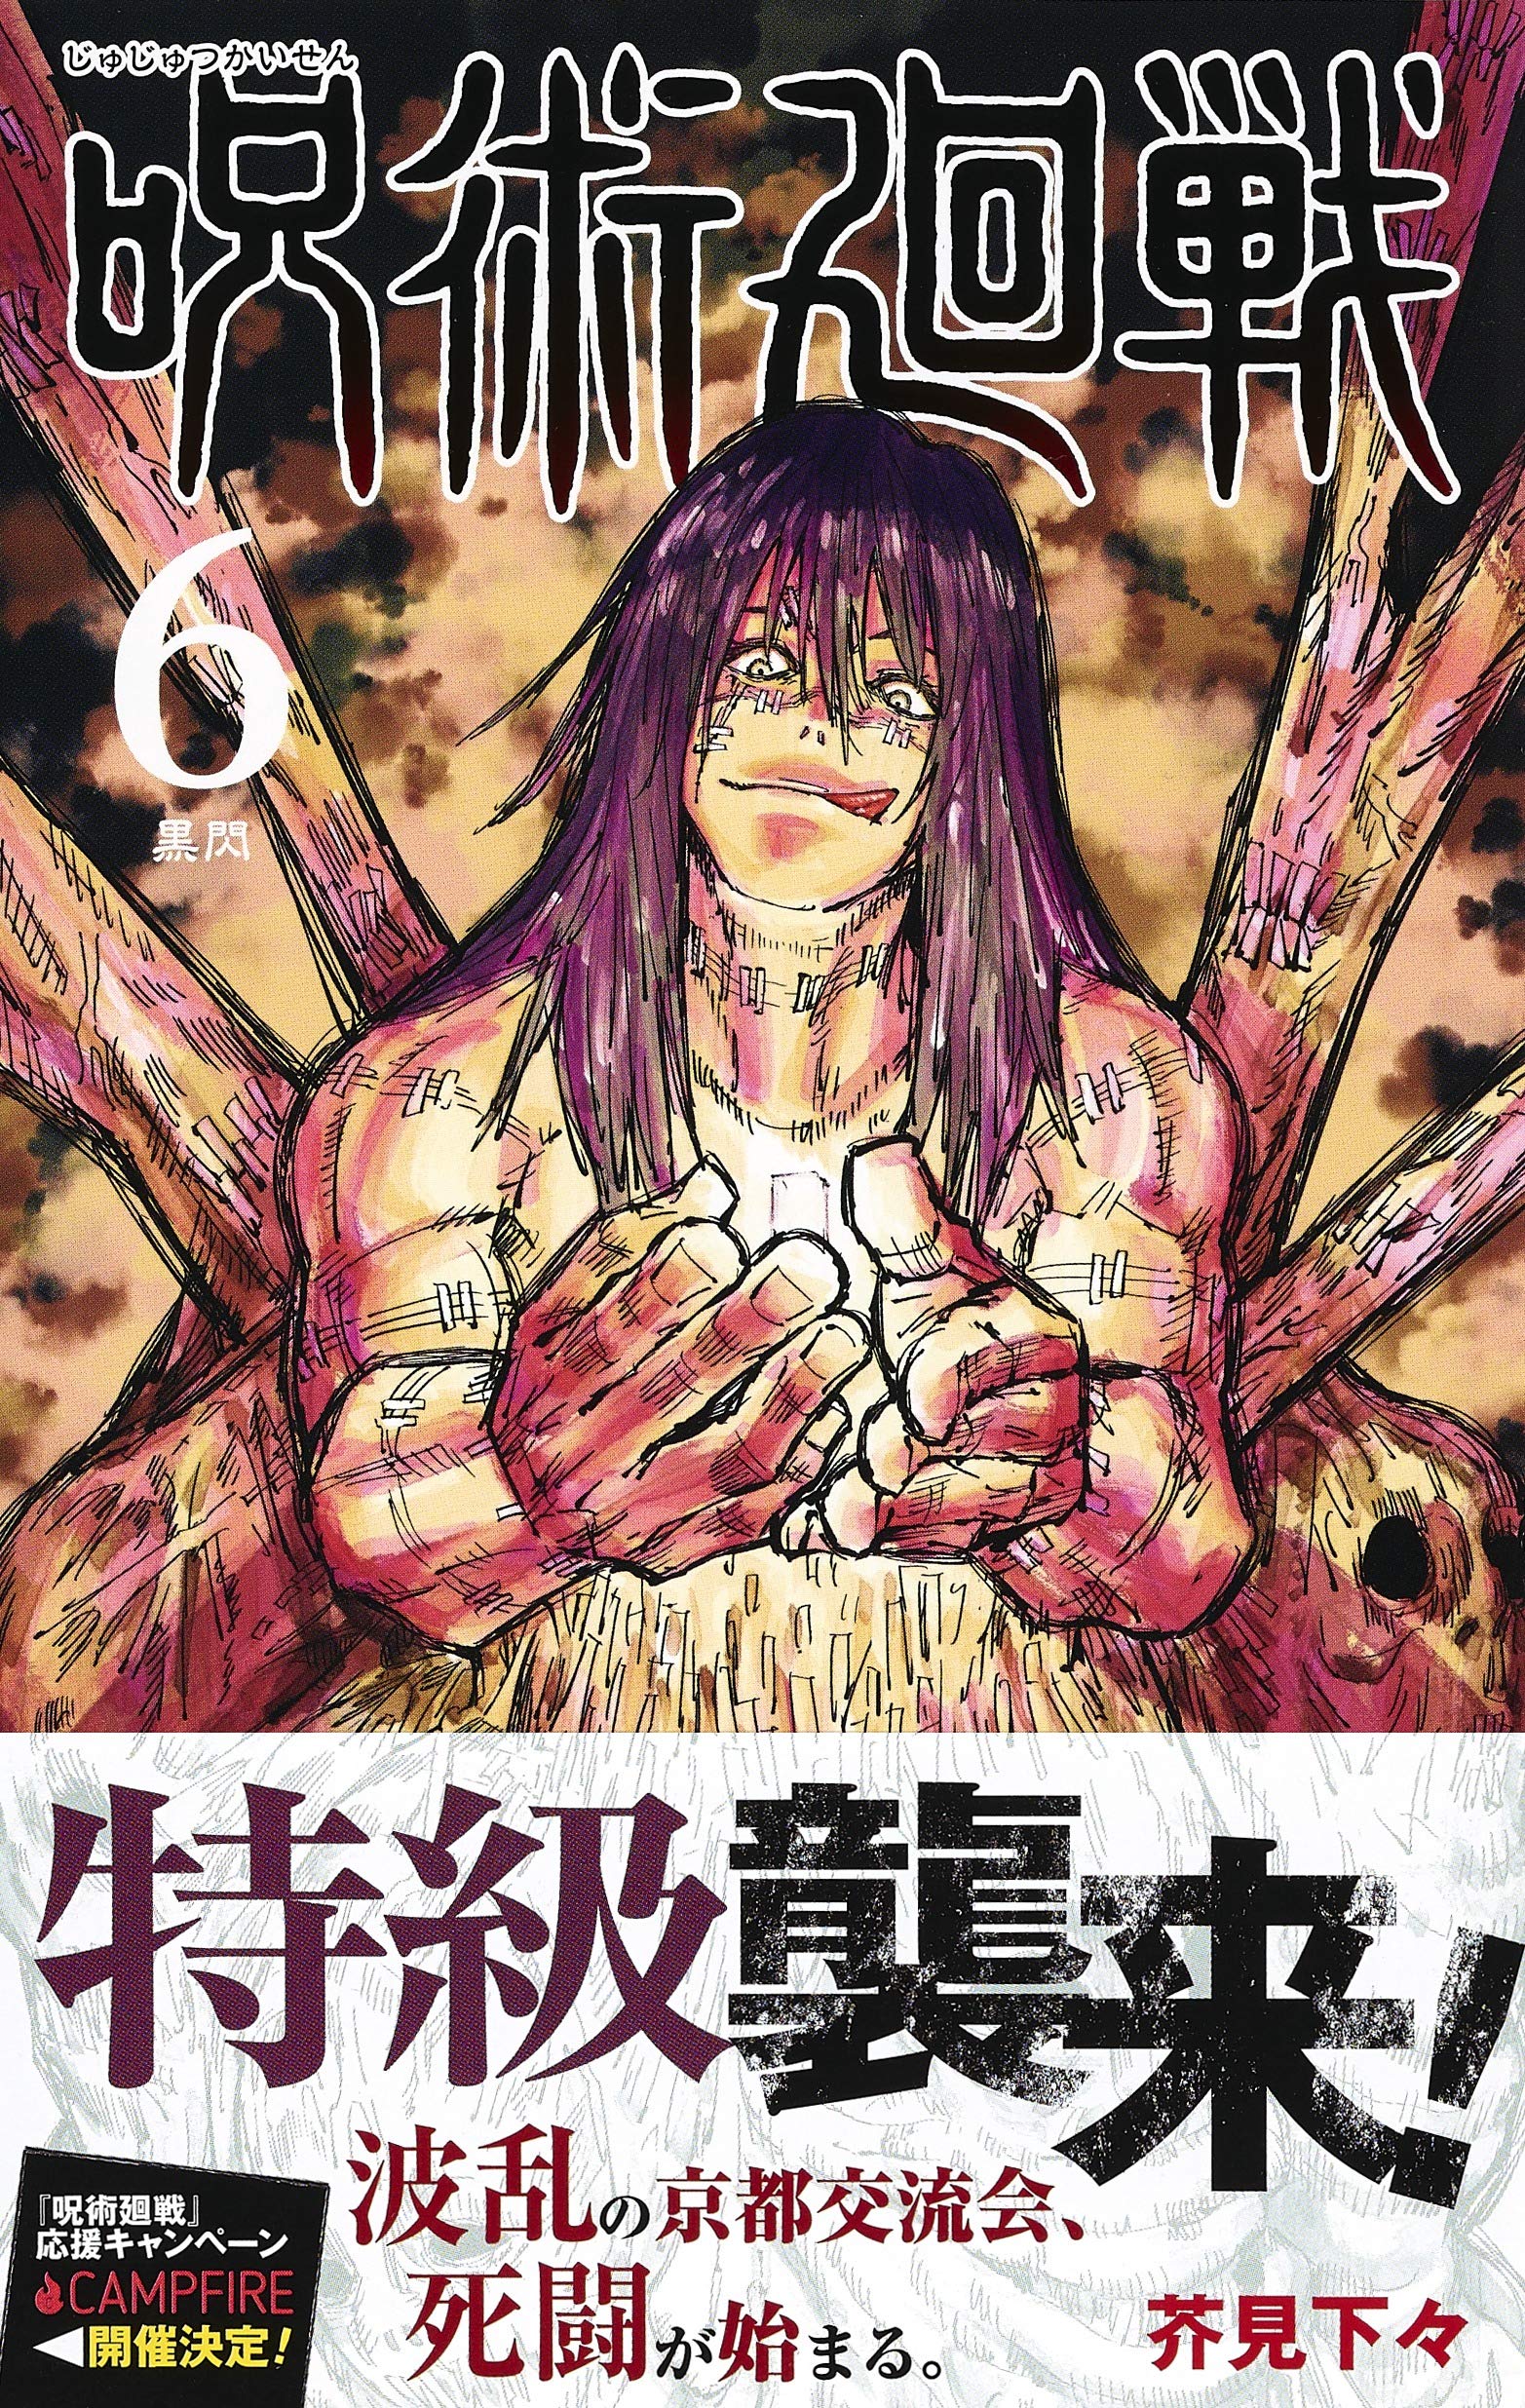 Manga Jujutsu Kaisen vol.6 (呪術廻戦 6 (ジャンプコミックス))  / Akutami Gege & 芥見 下々